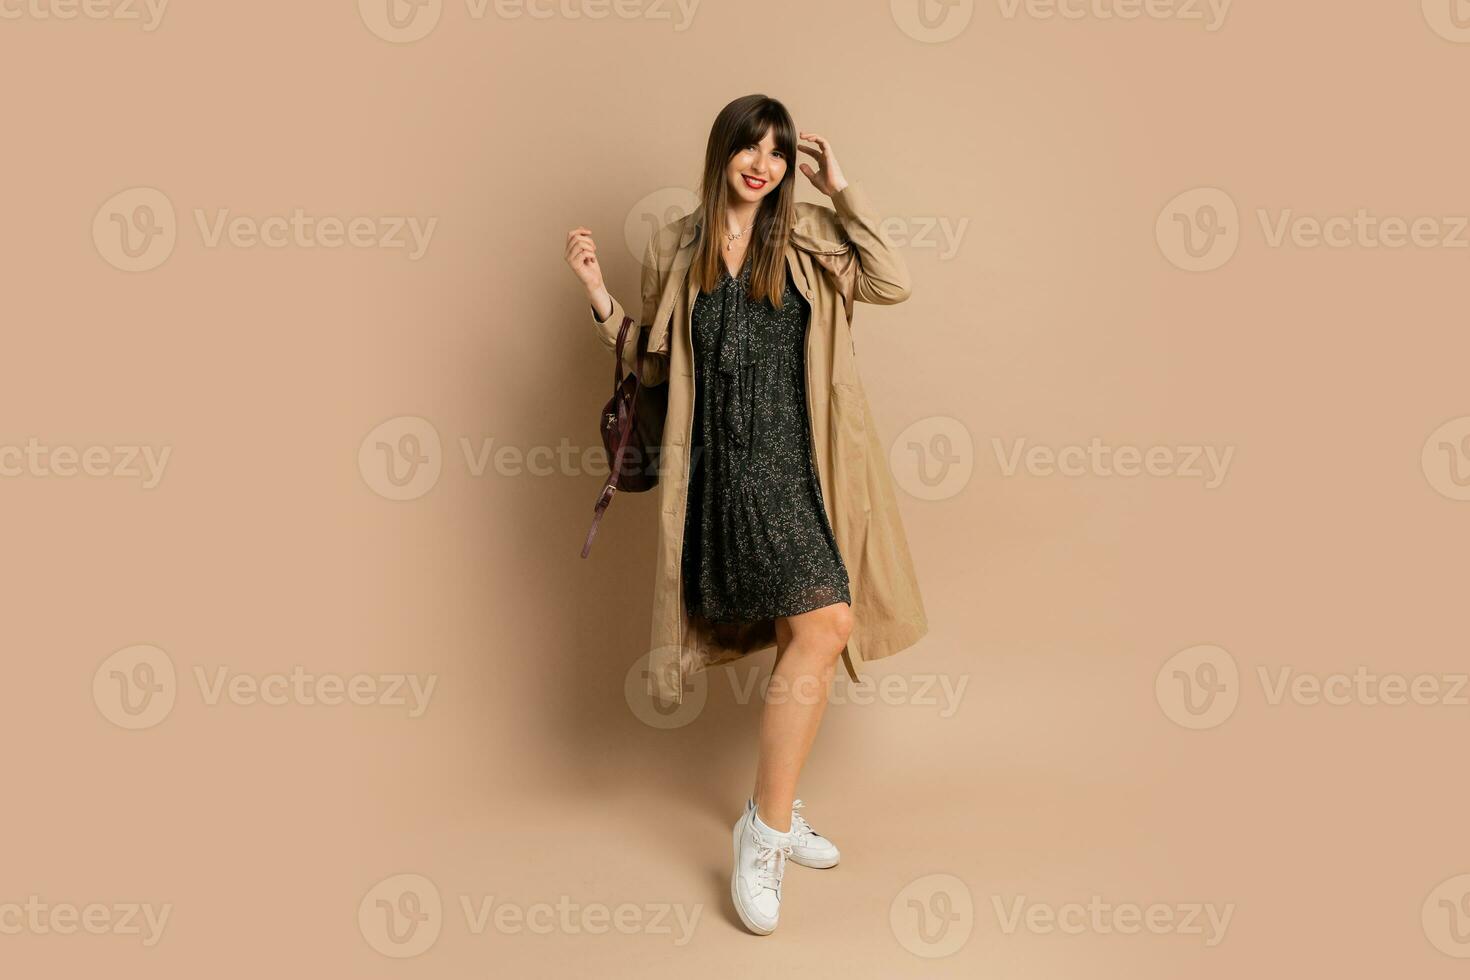 elegant brunette vrouw vervelend modieus jas , poseren over- beige achtergrond. winter mode trends. foto